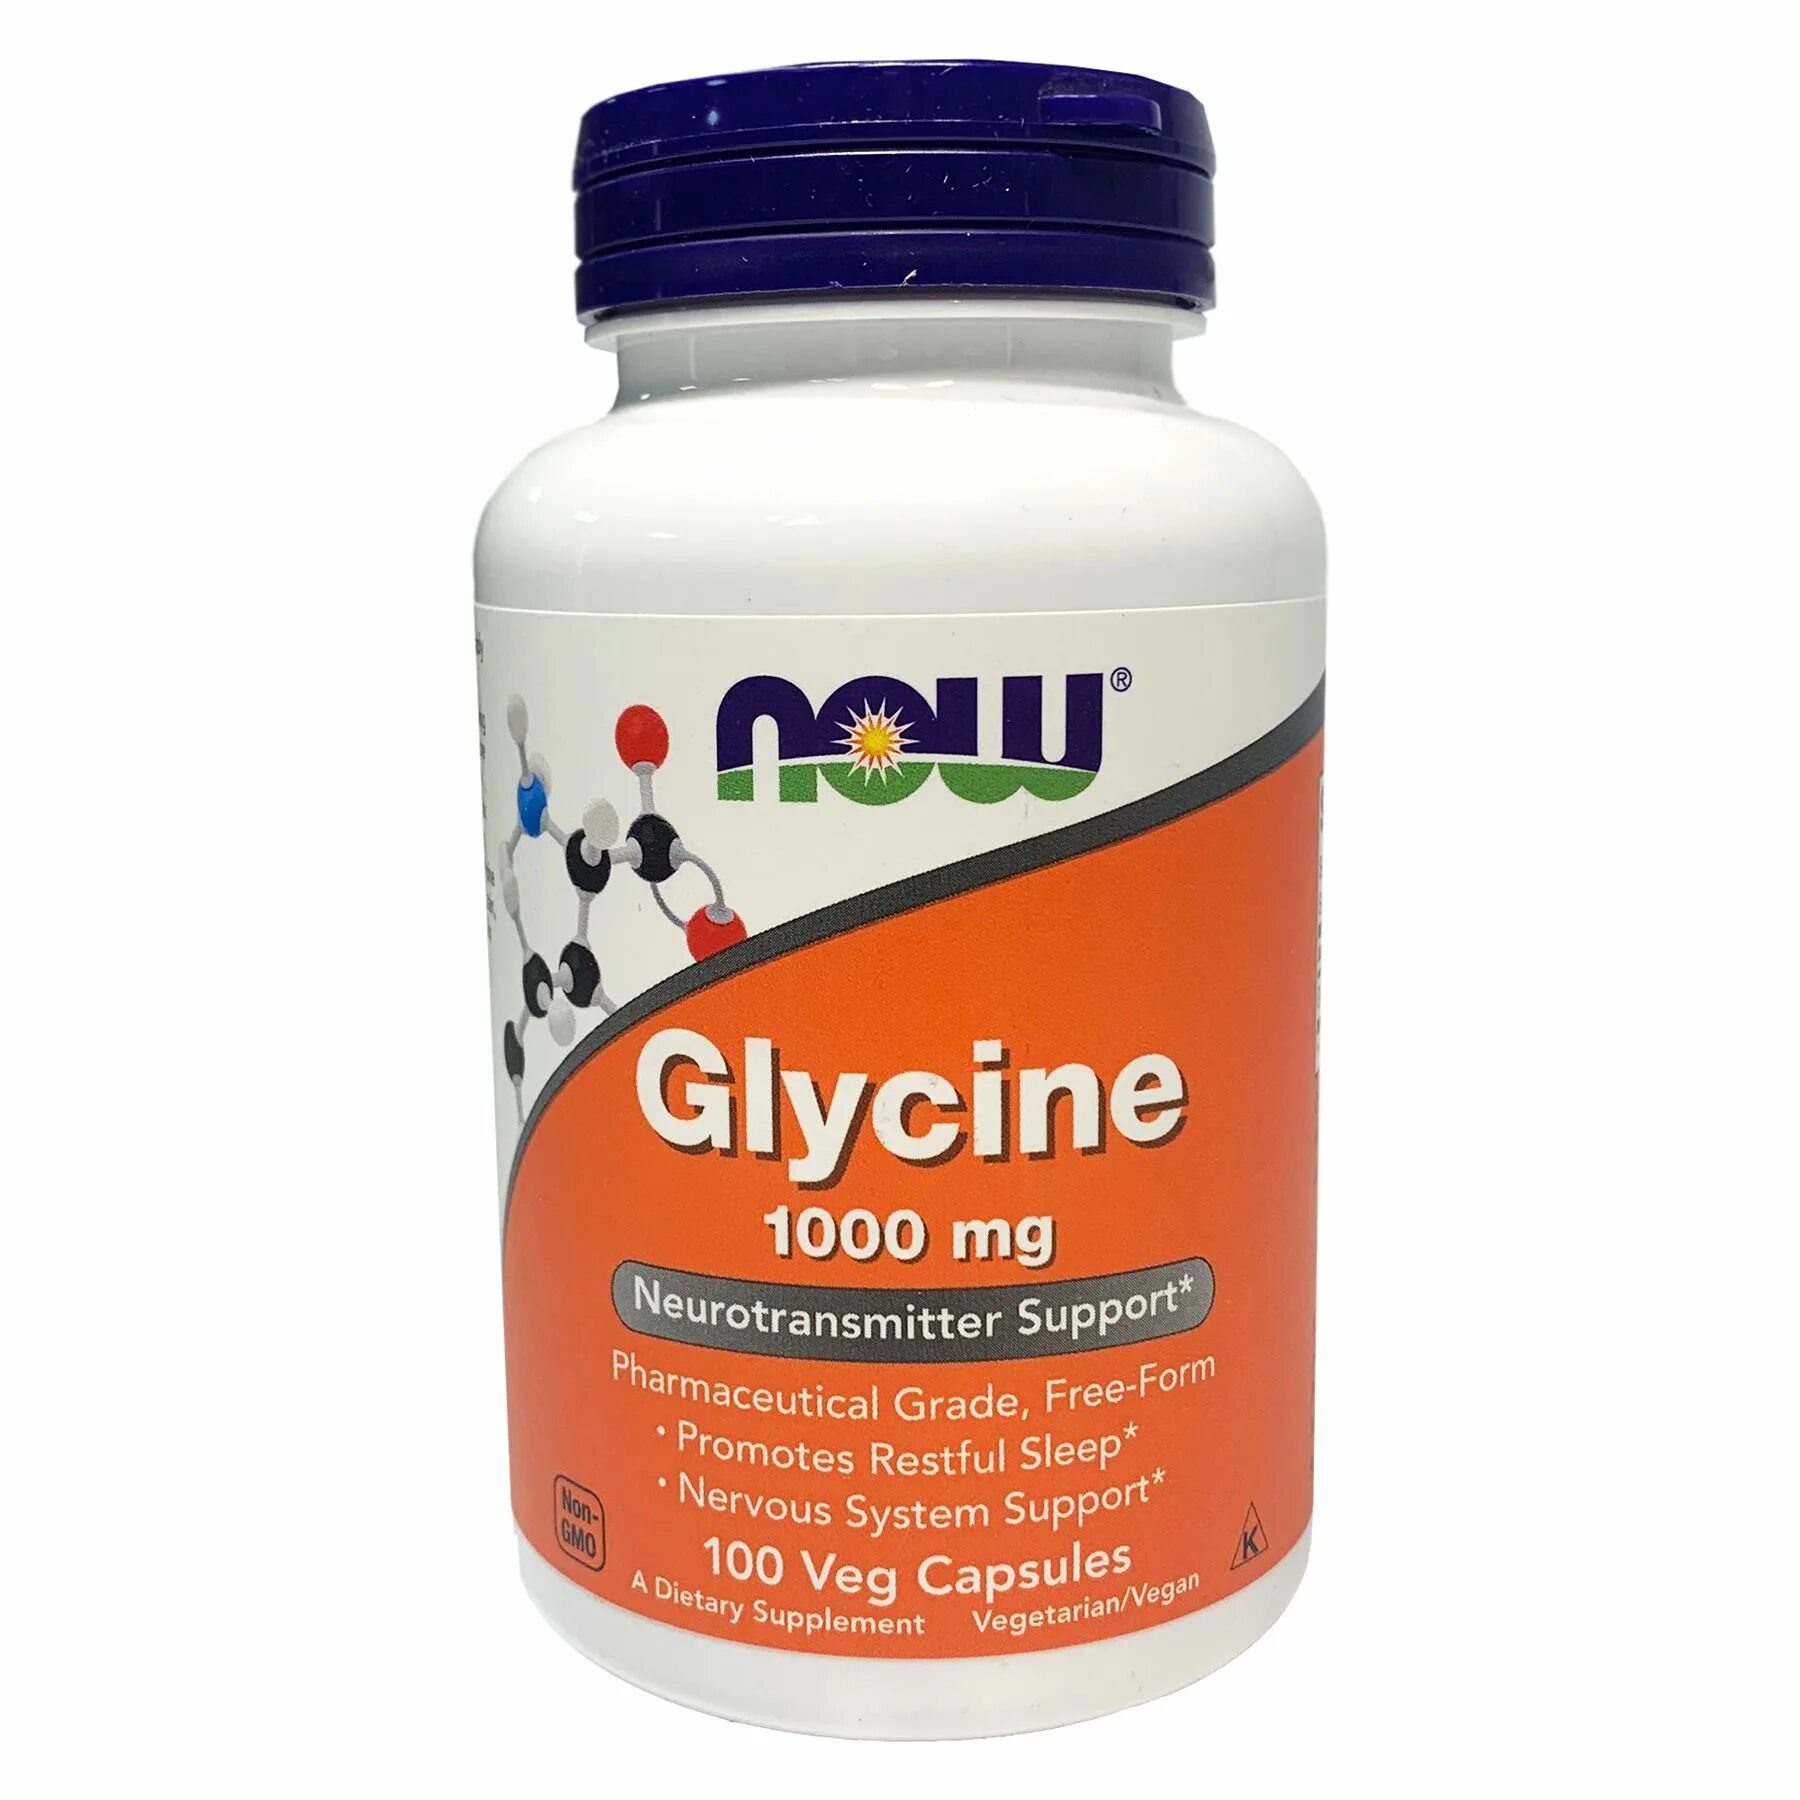 Glycine 1000 MG. Now Glycine 1000 мг. Глицин 100мг. Глицин, 1000 мг, 100 вегетарианских капсул.